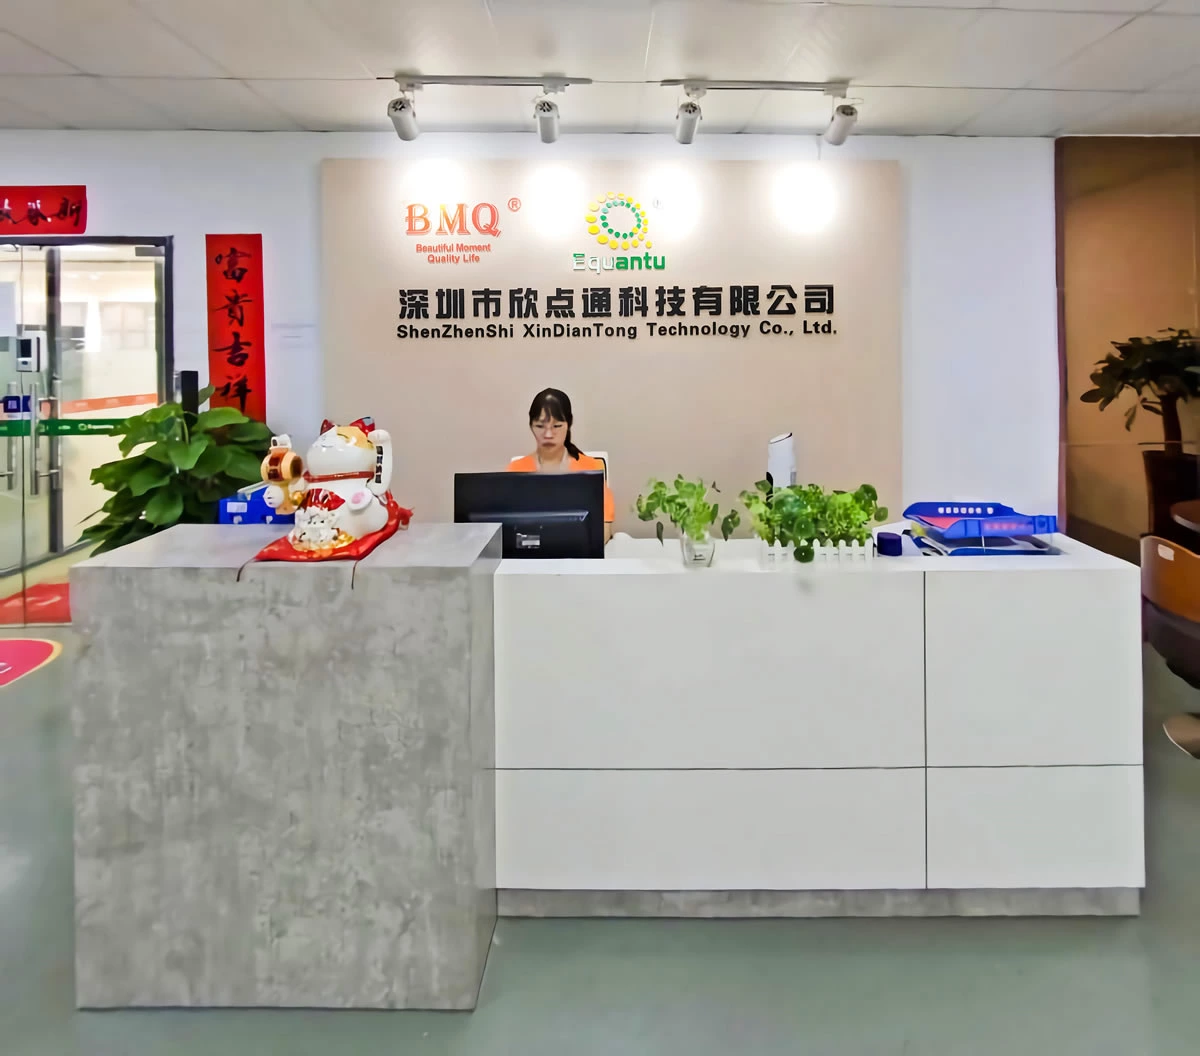 Company Culture of Shenzhen Equantu Technology Co., Ltd.